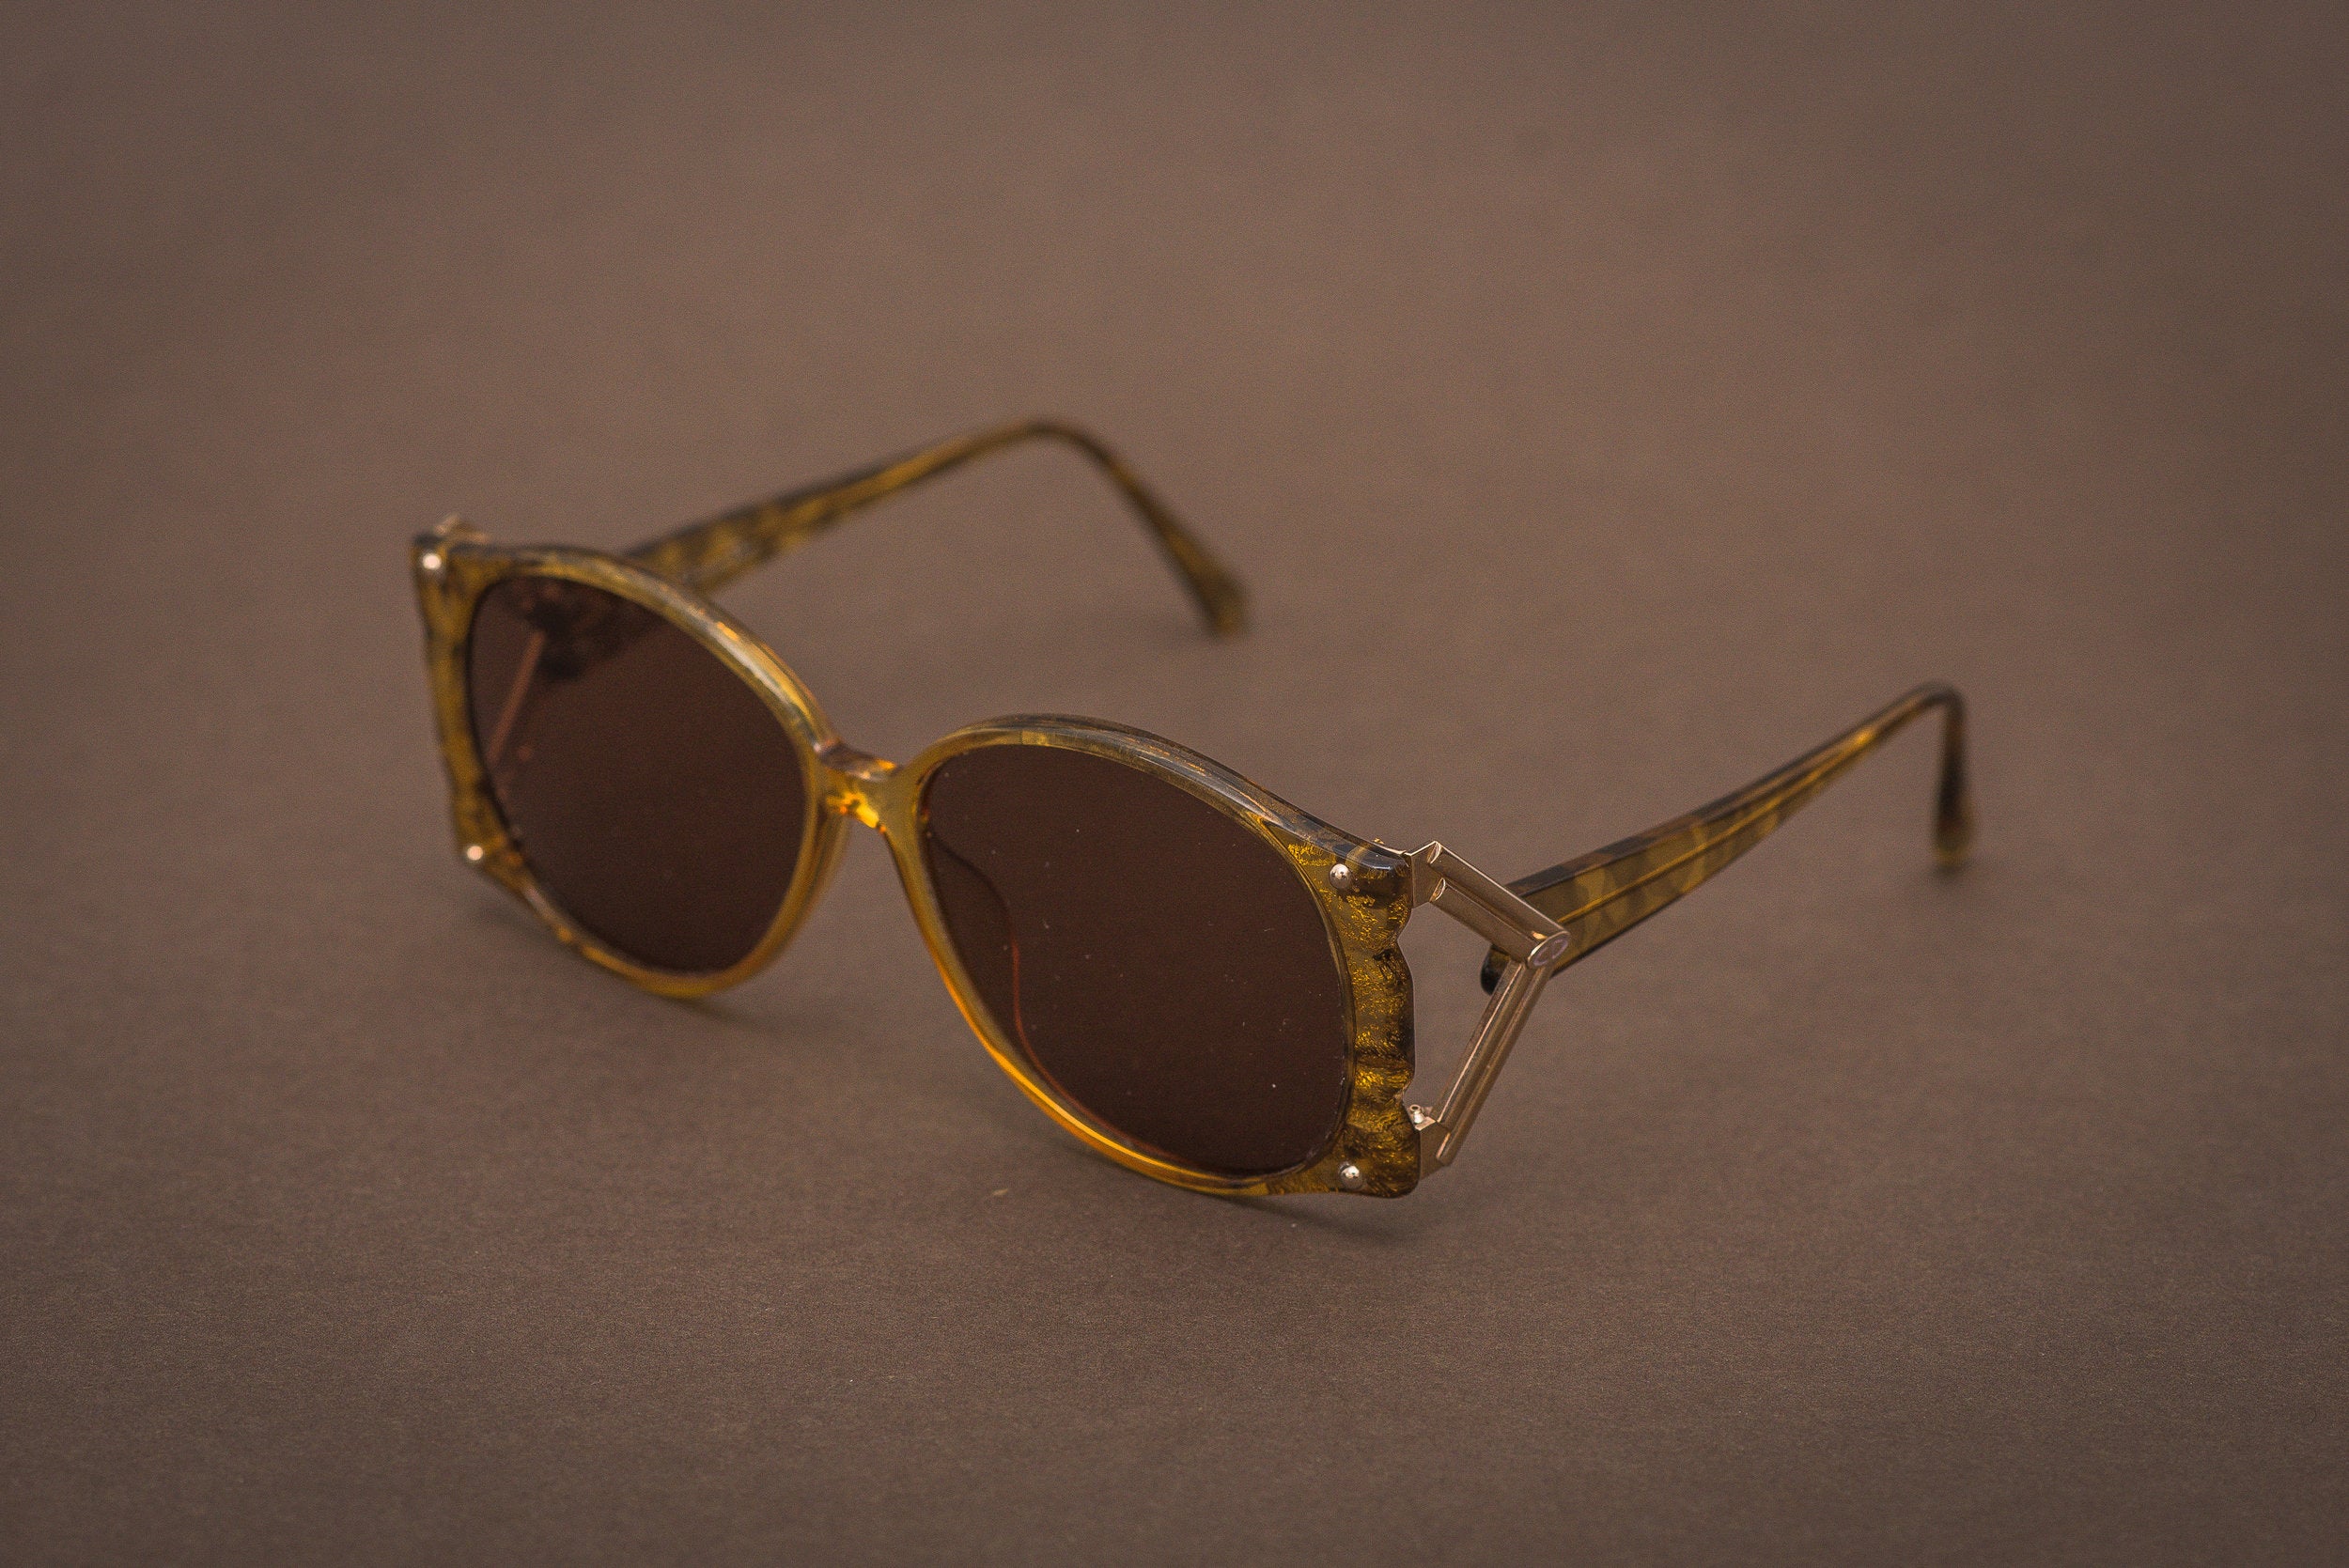 Christian Dior 2575 sunglasses